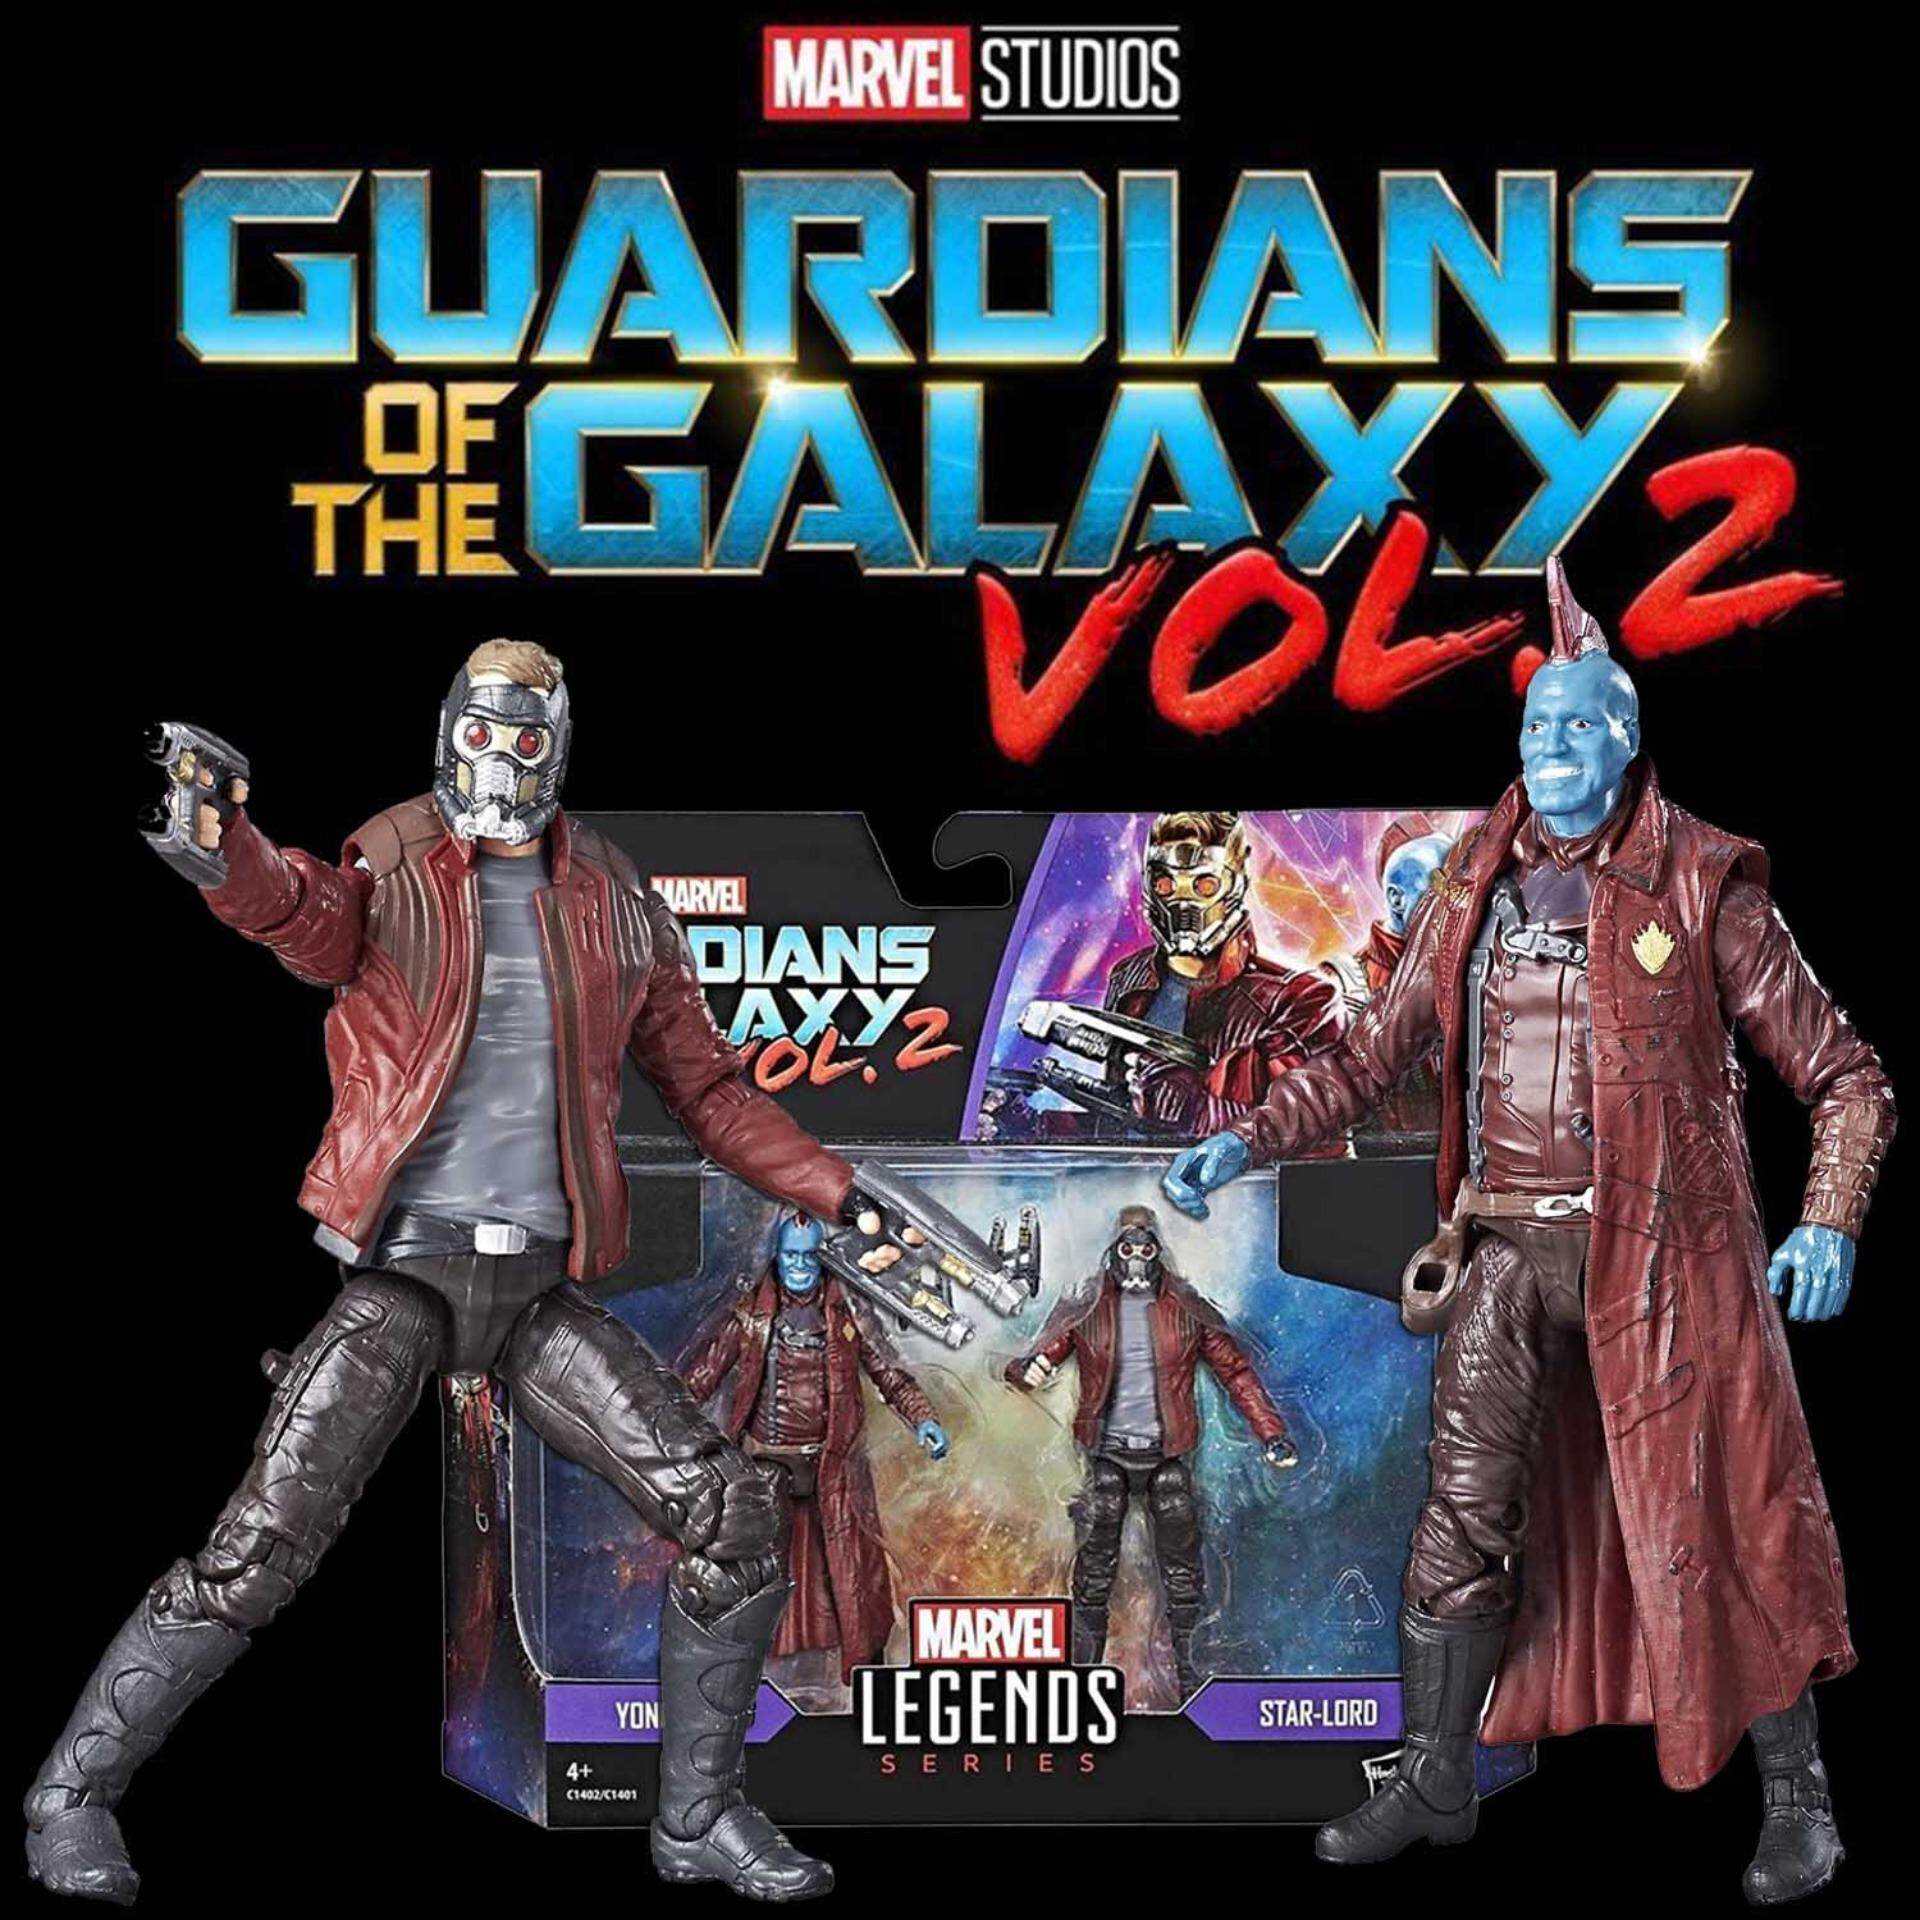 Model โมเดล งานแท้ 100% Marvel Legends จาก Guardians of The Galaxy รวมพันธุ์นักสู้พิทักษ์จักรวาล Star lord สตาร์ ลอร์ด and Yondu ยอนดู 2pk Ver Figma ฟิกม่า Anime ขยับแขน-ขาได้ ของขวัญ Gift อนิเมะ การ์ตูน มังงะ Doll ตุ๊กตา manga Figure ฟิกเกอร์